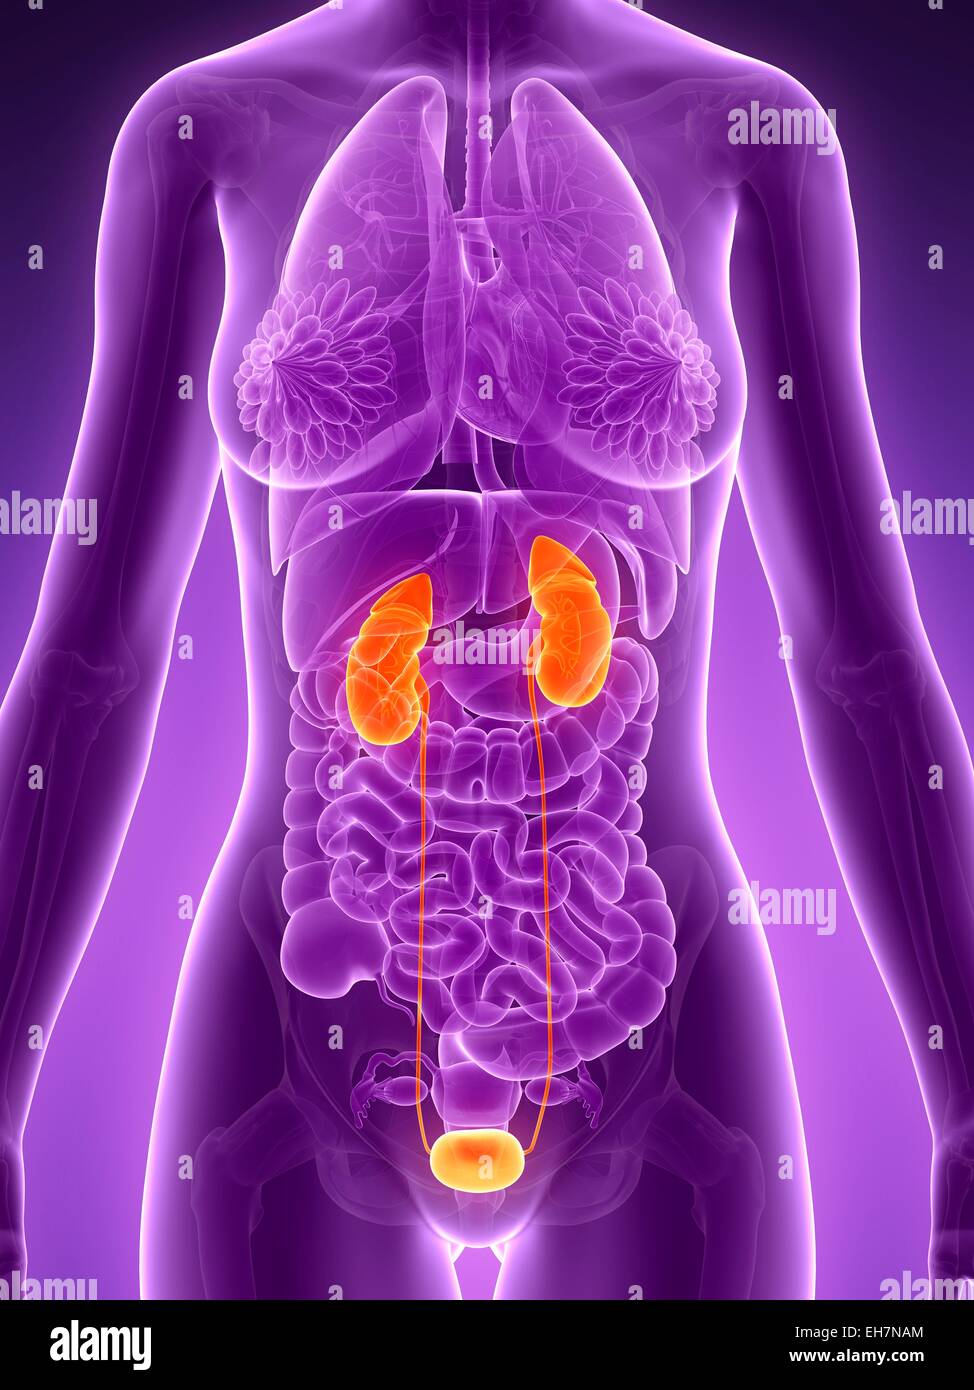 Female urinary system, illustration Stock Photo